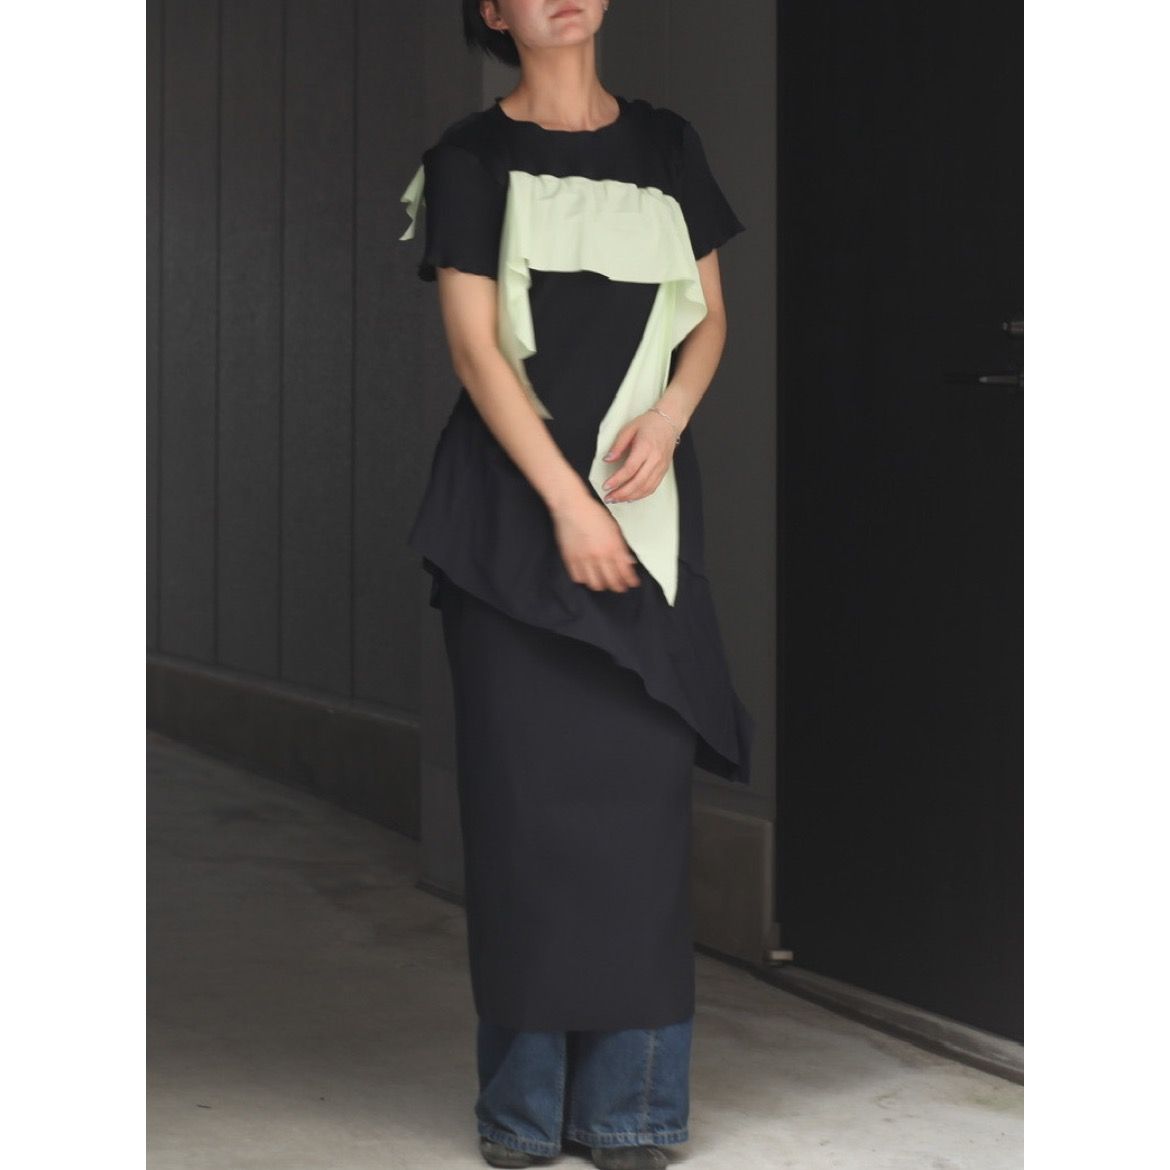 kotohayokozawa - 【残り一点】Todo Wave Short Sleeve Dress